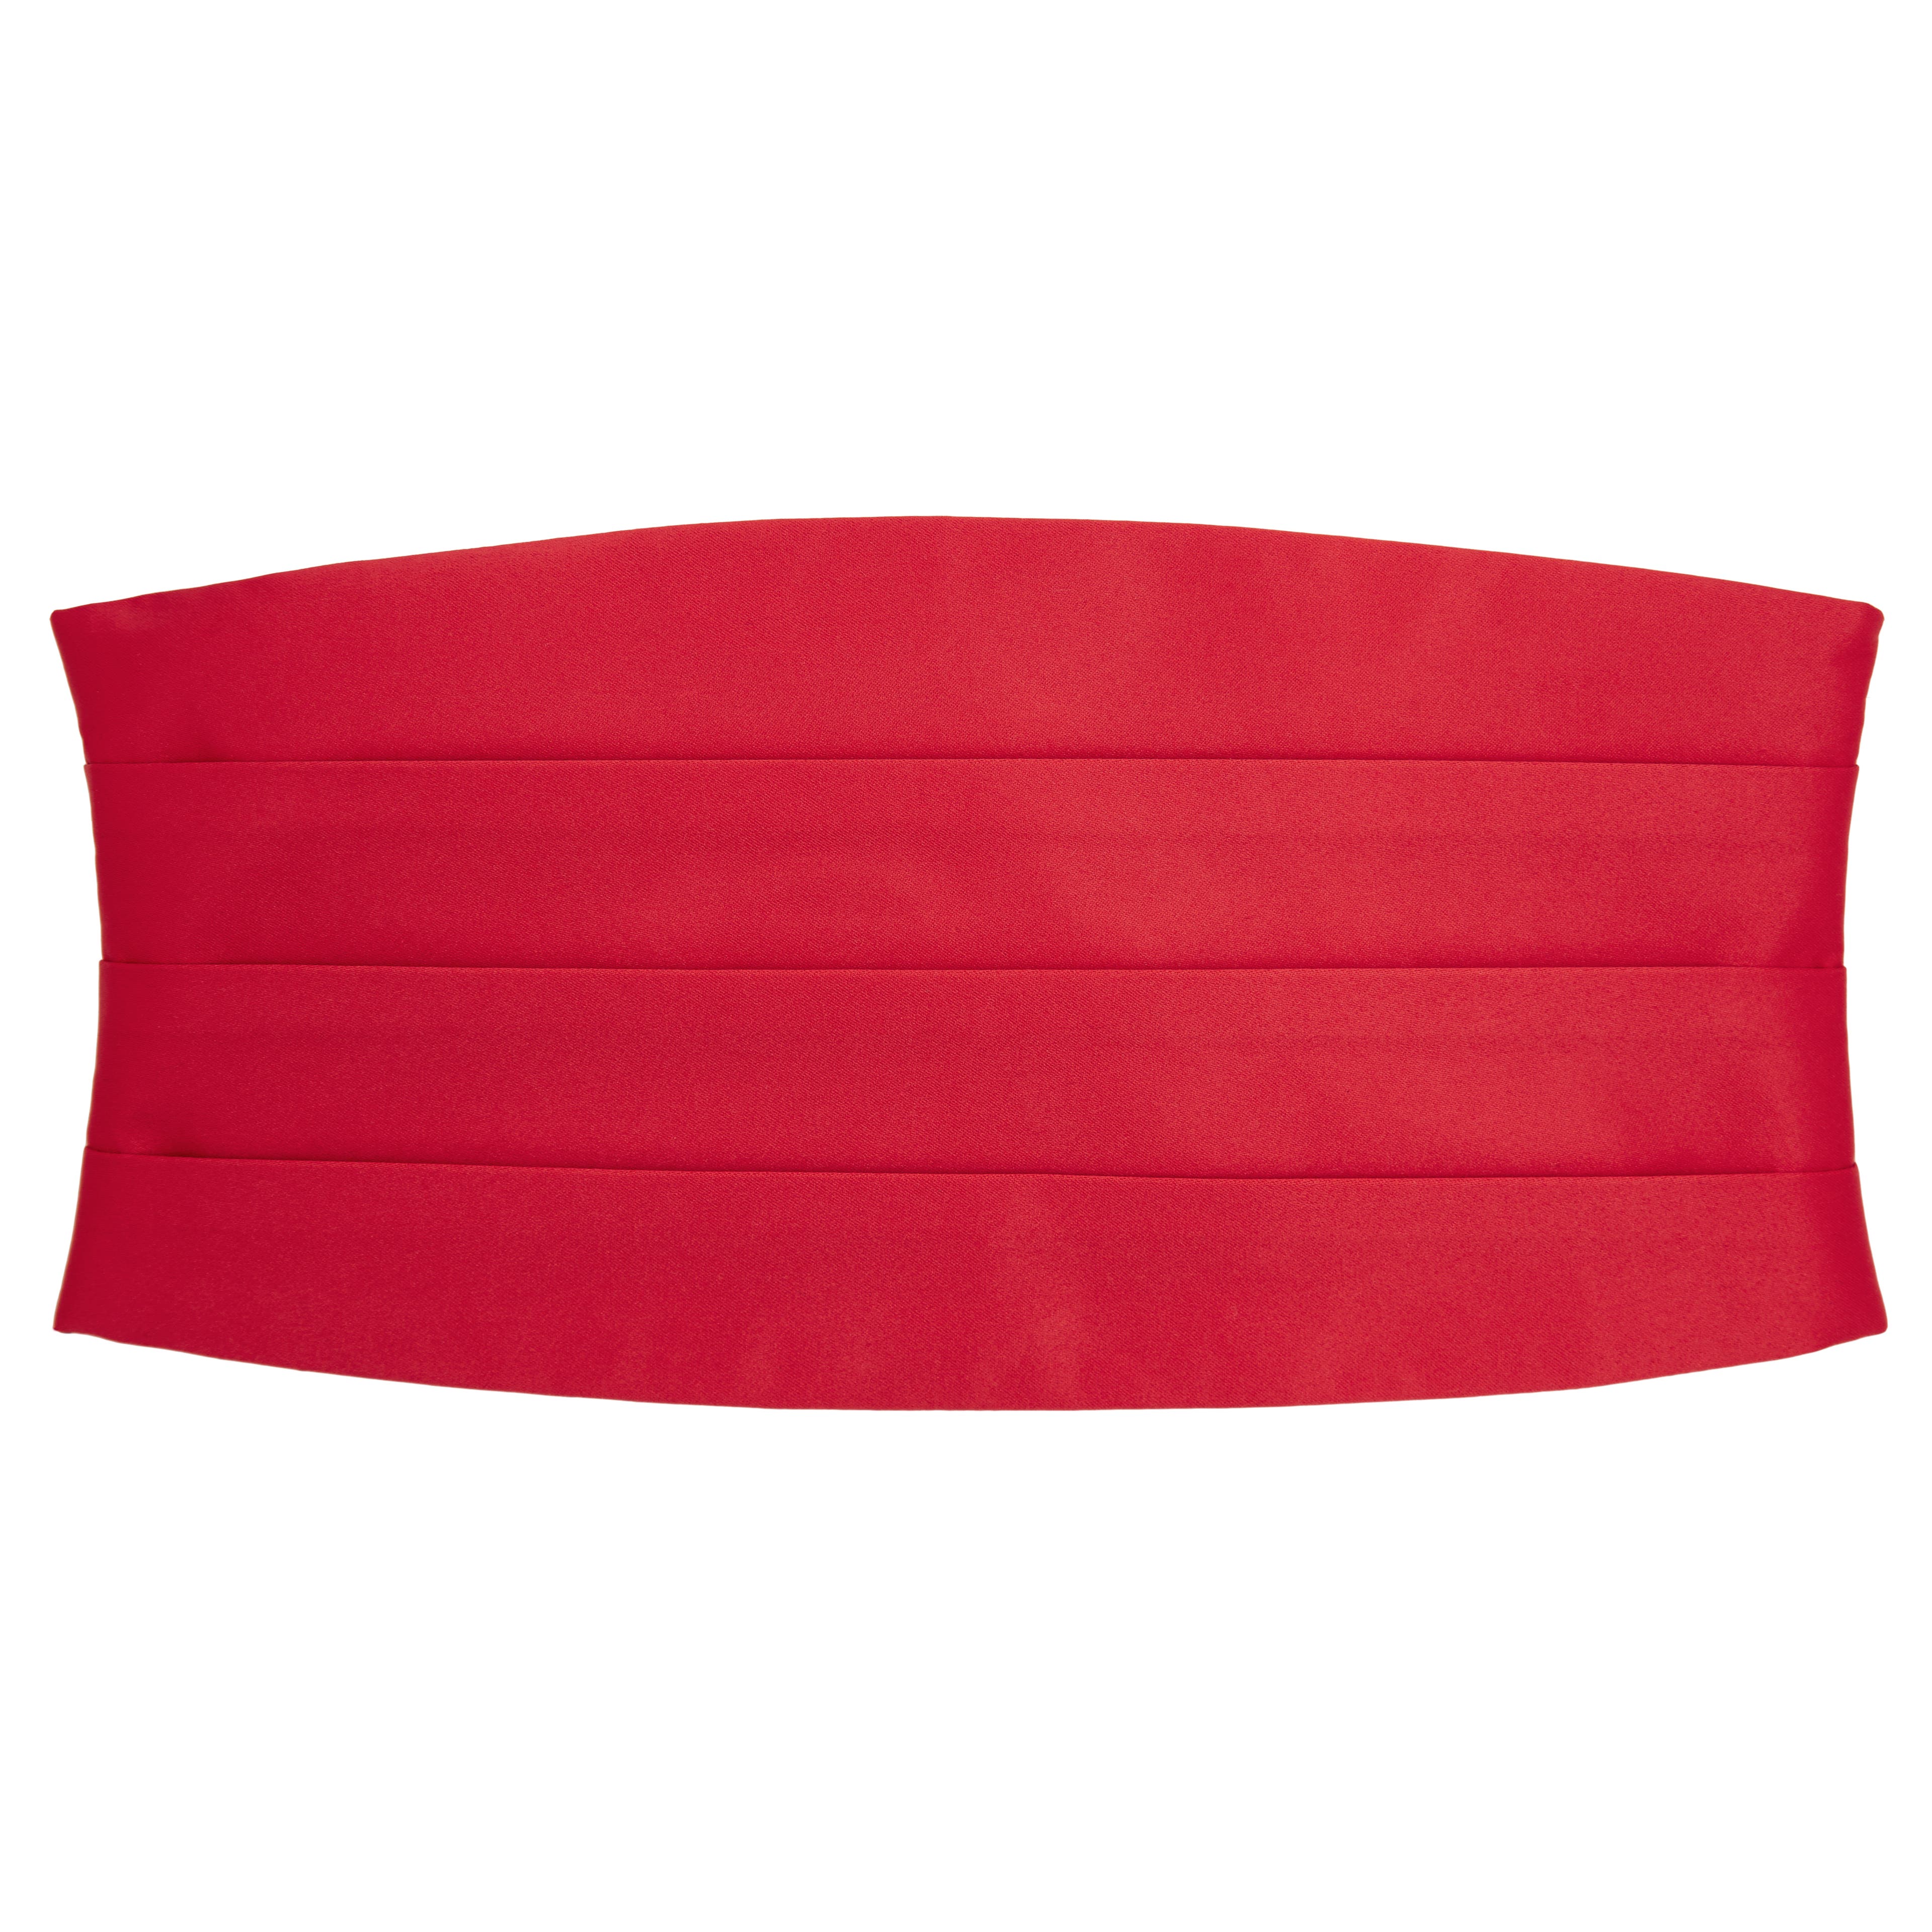 Fajín/Banda Color Rojo 220 x 9 cm.